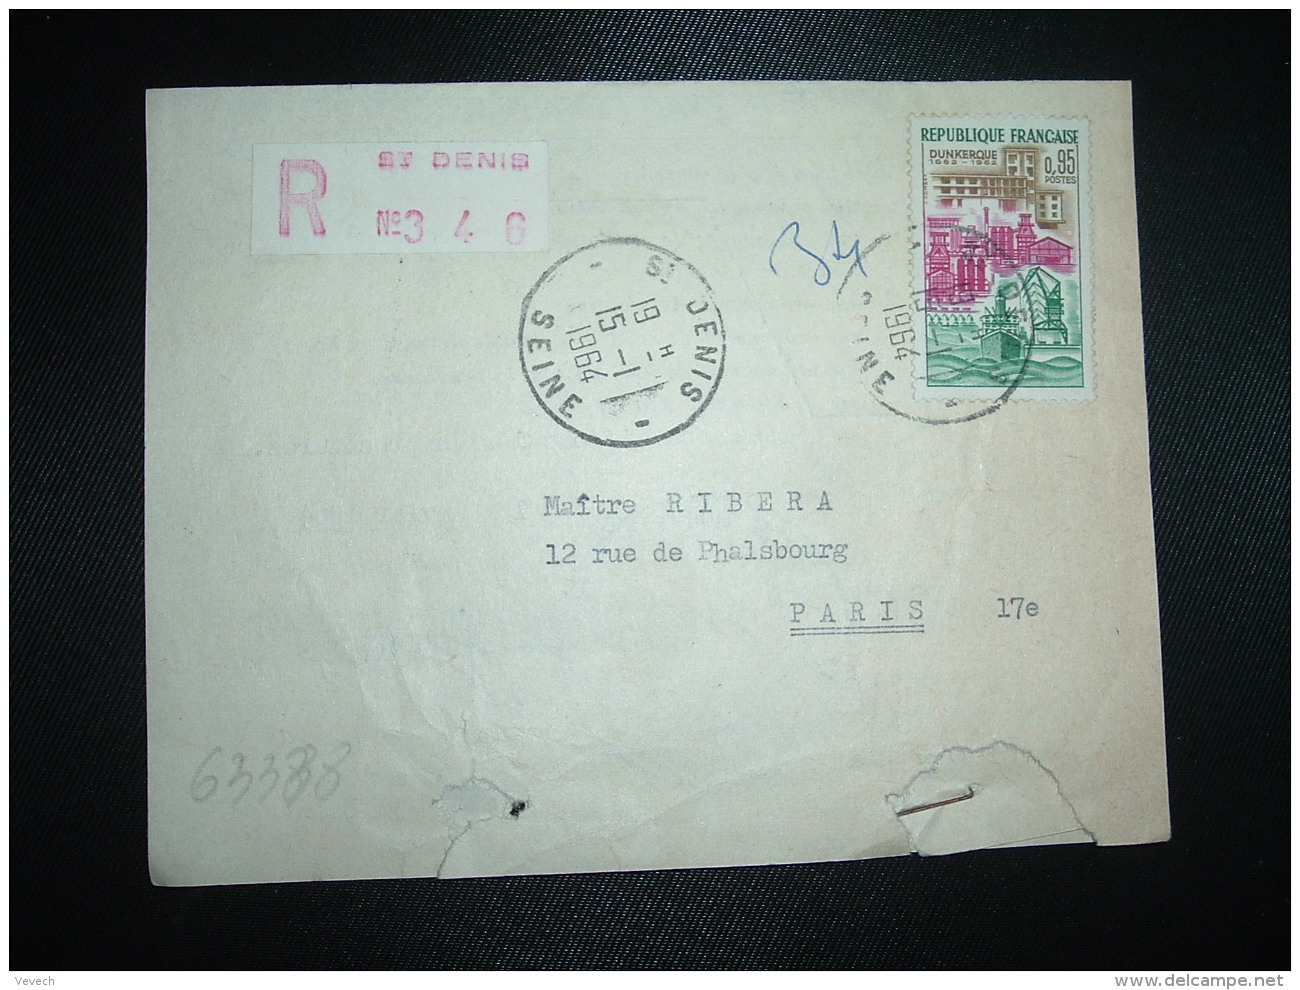 LR (PLI) TP DUNKERQUE 0,95 OBL.15-1-1964 ST DENIS SEINE (93) - Tarifs Postaux